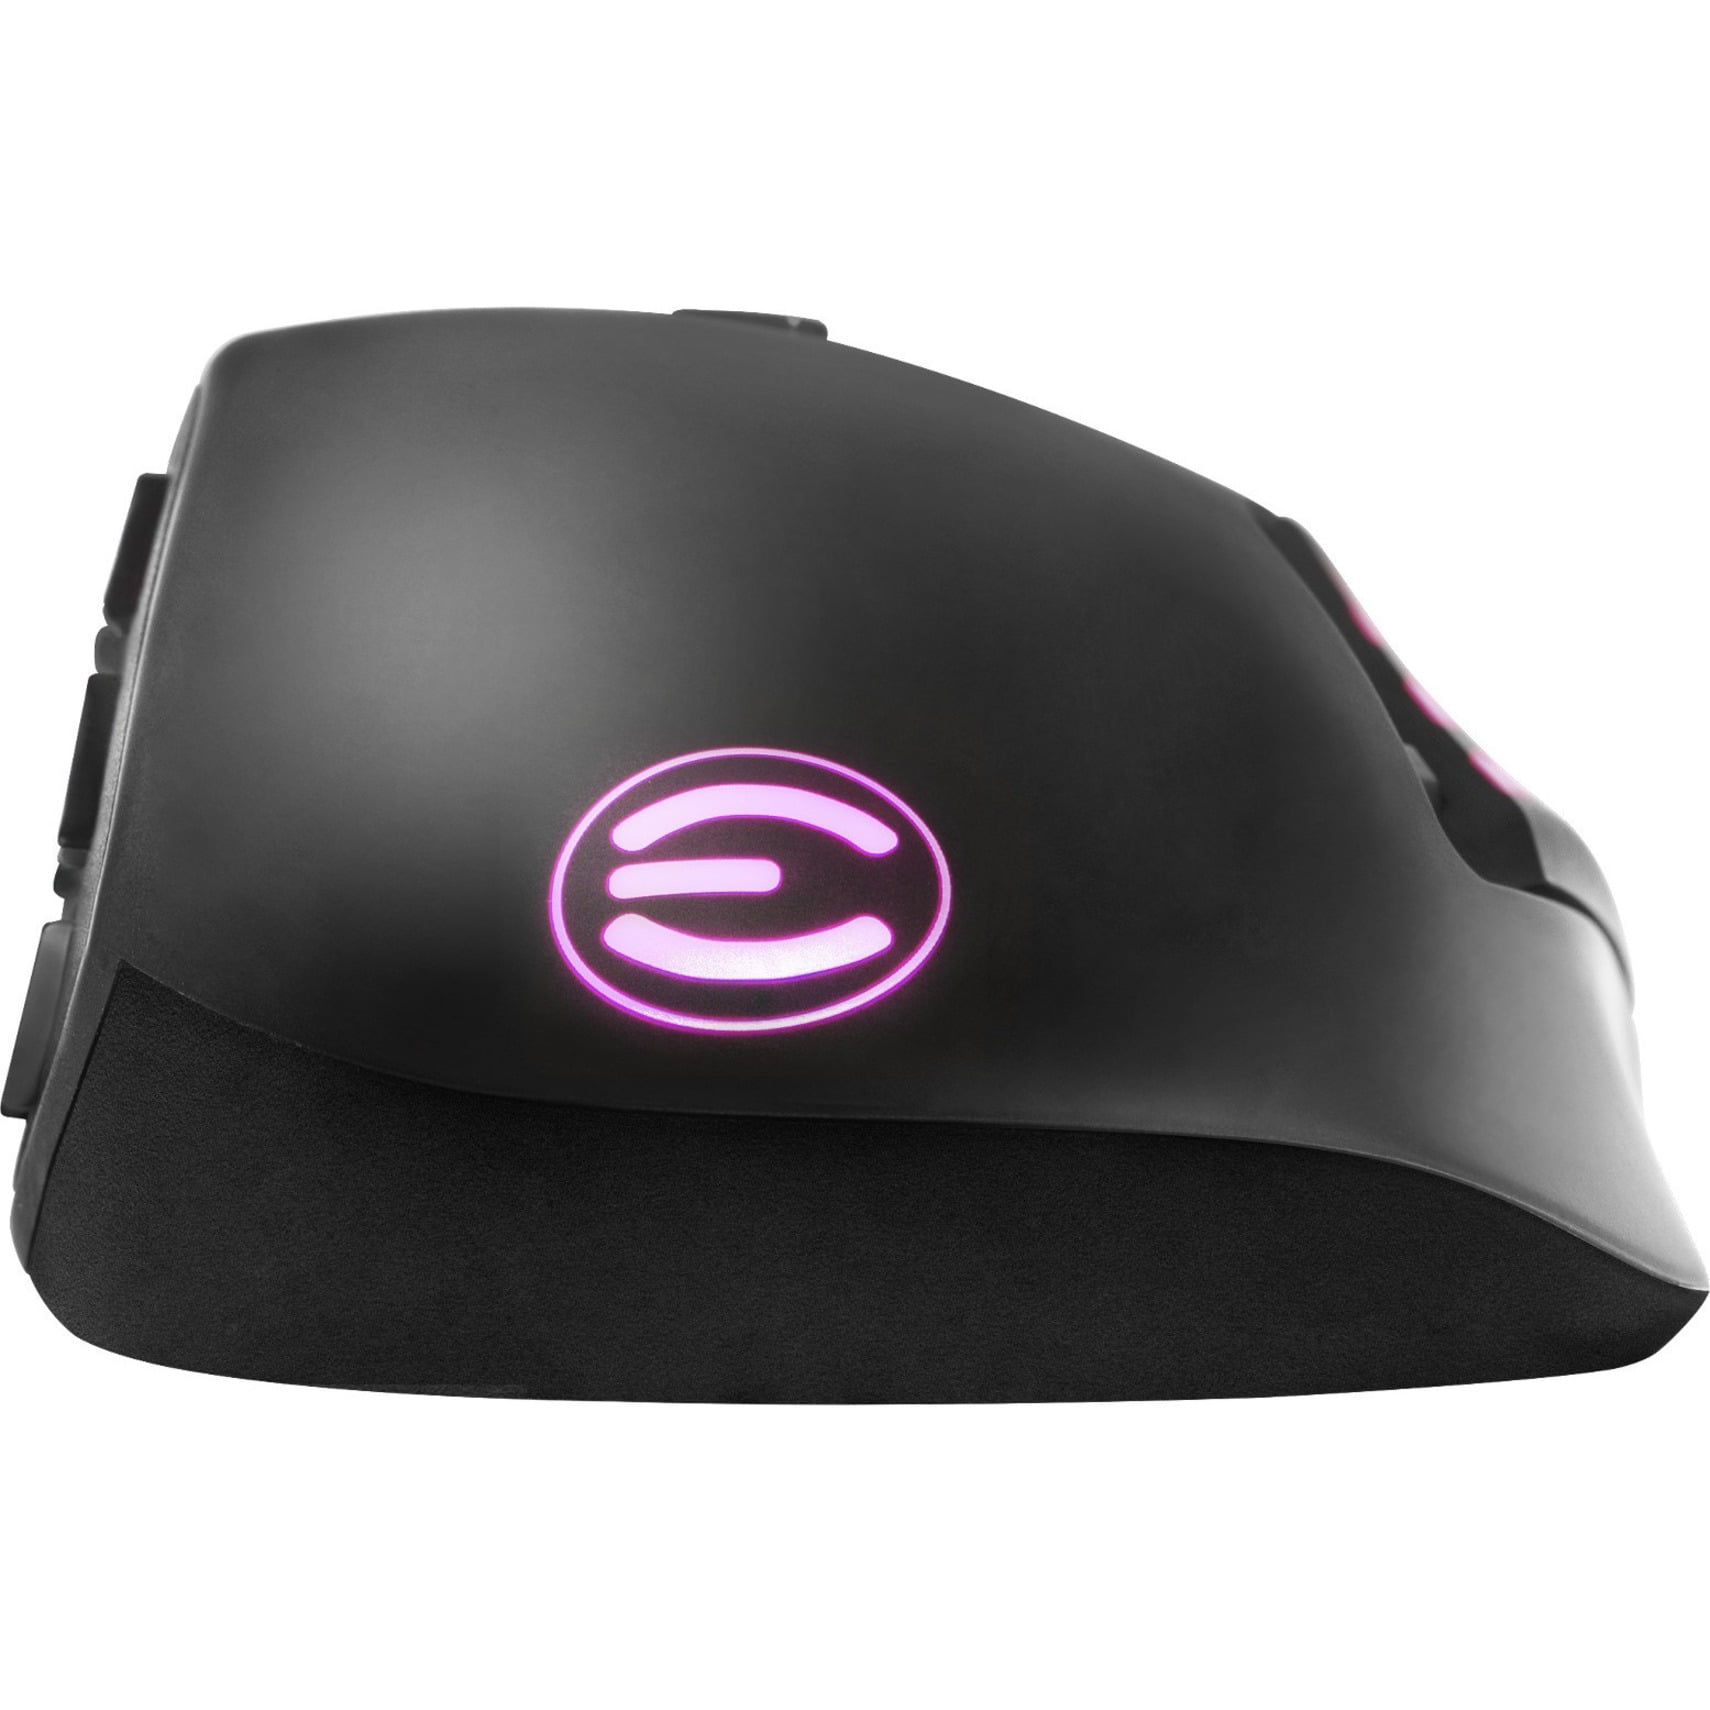 EVGA X15 Gaming Mouse, Black